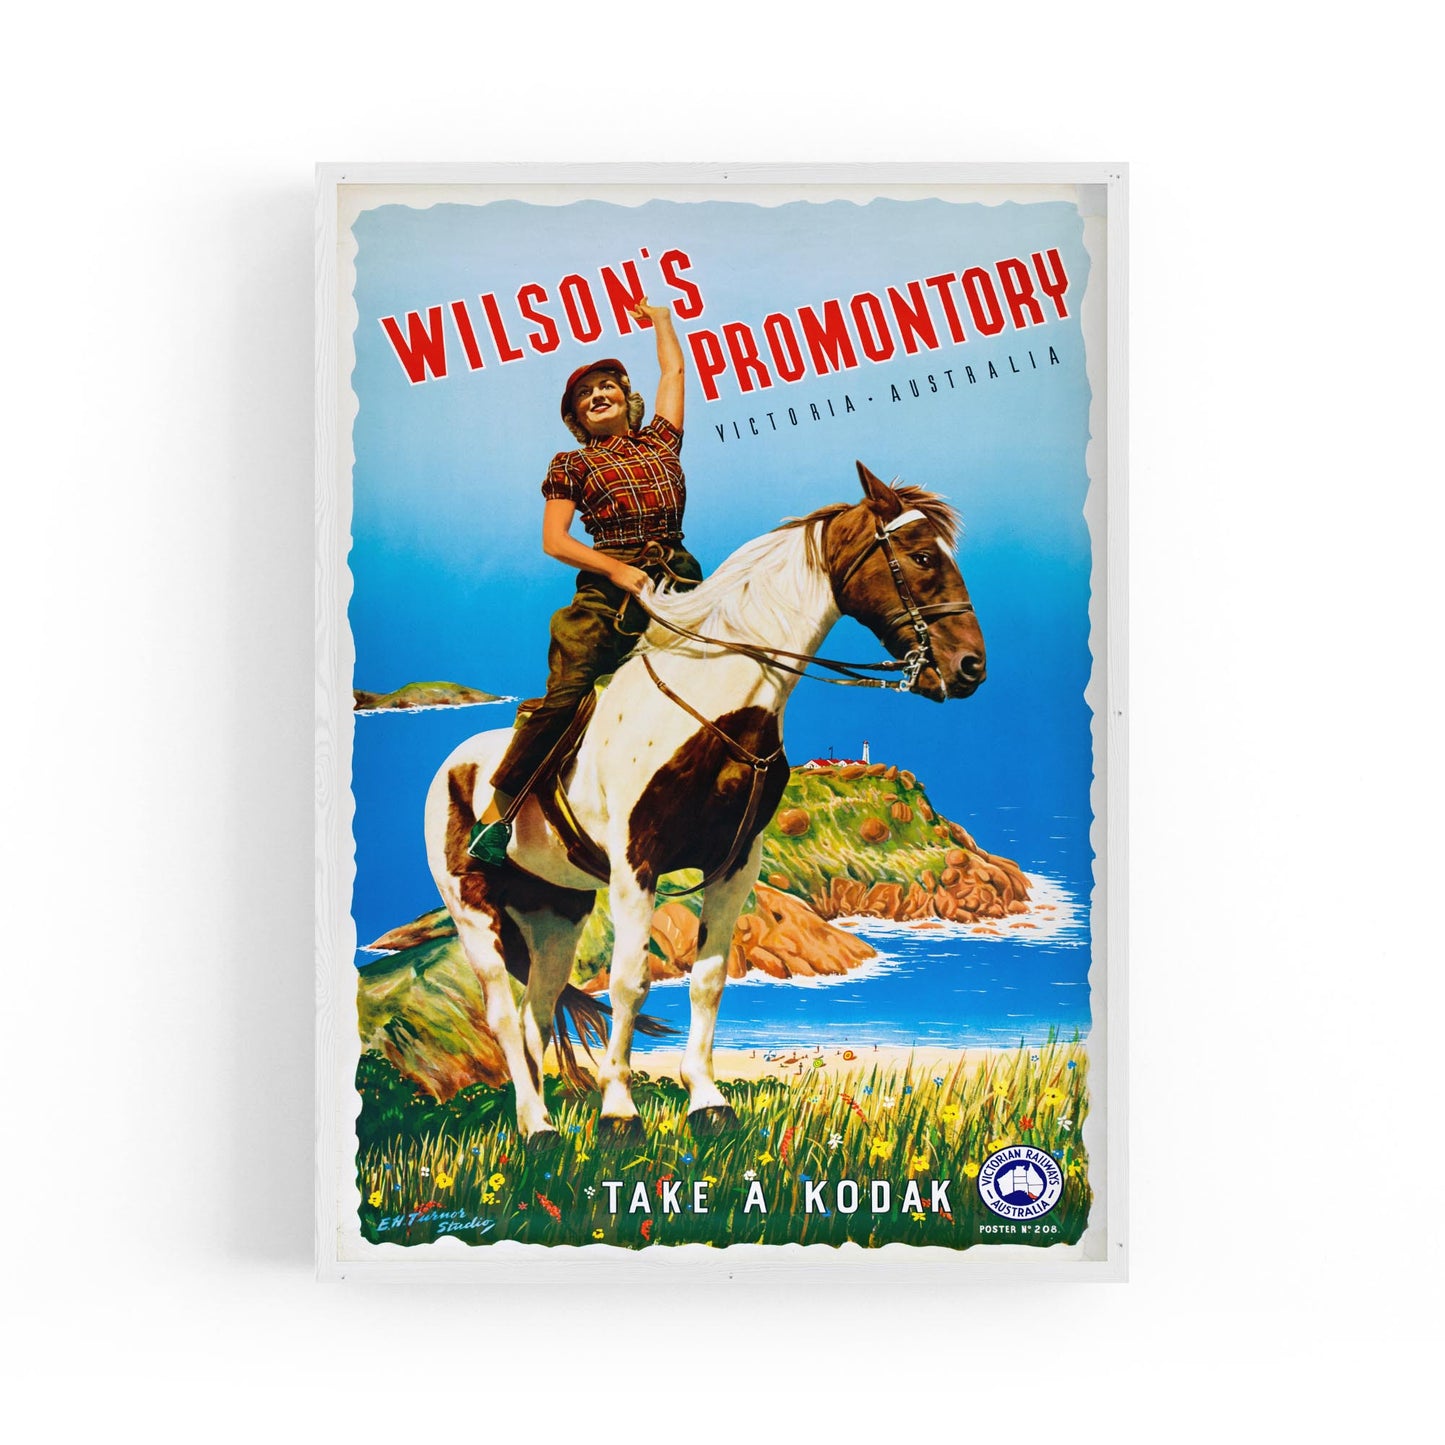 Wilson's Promontory, Victoria Australia "Take a Kodak" | Framed Vintage Poster